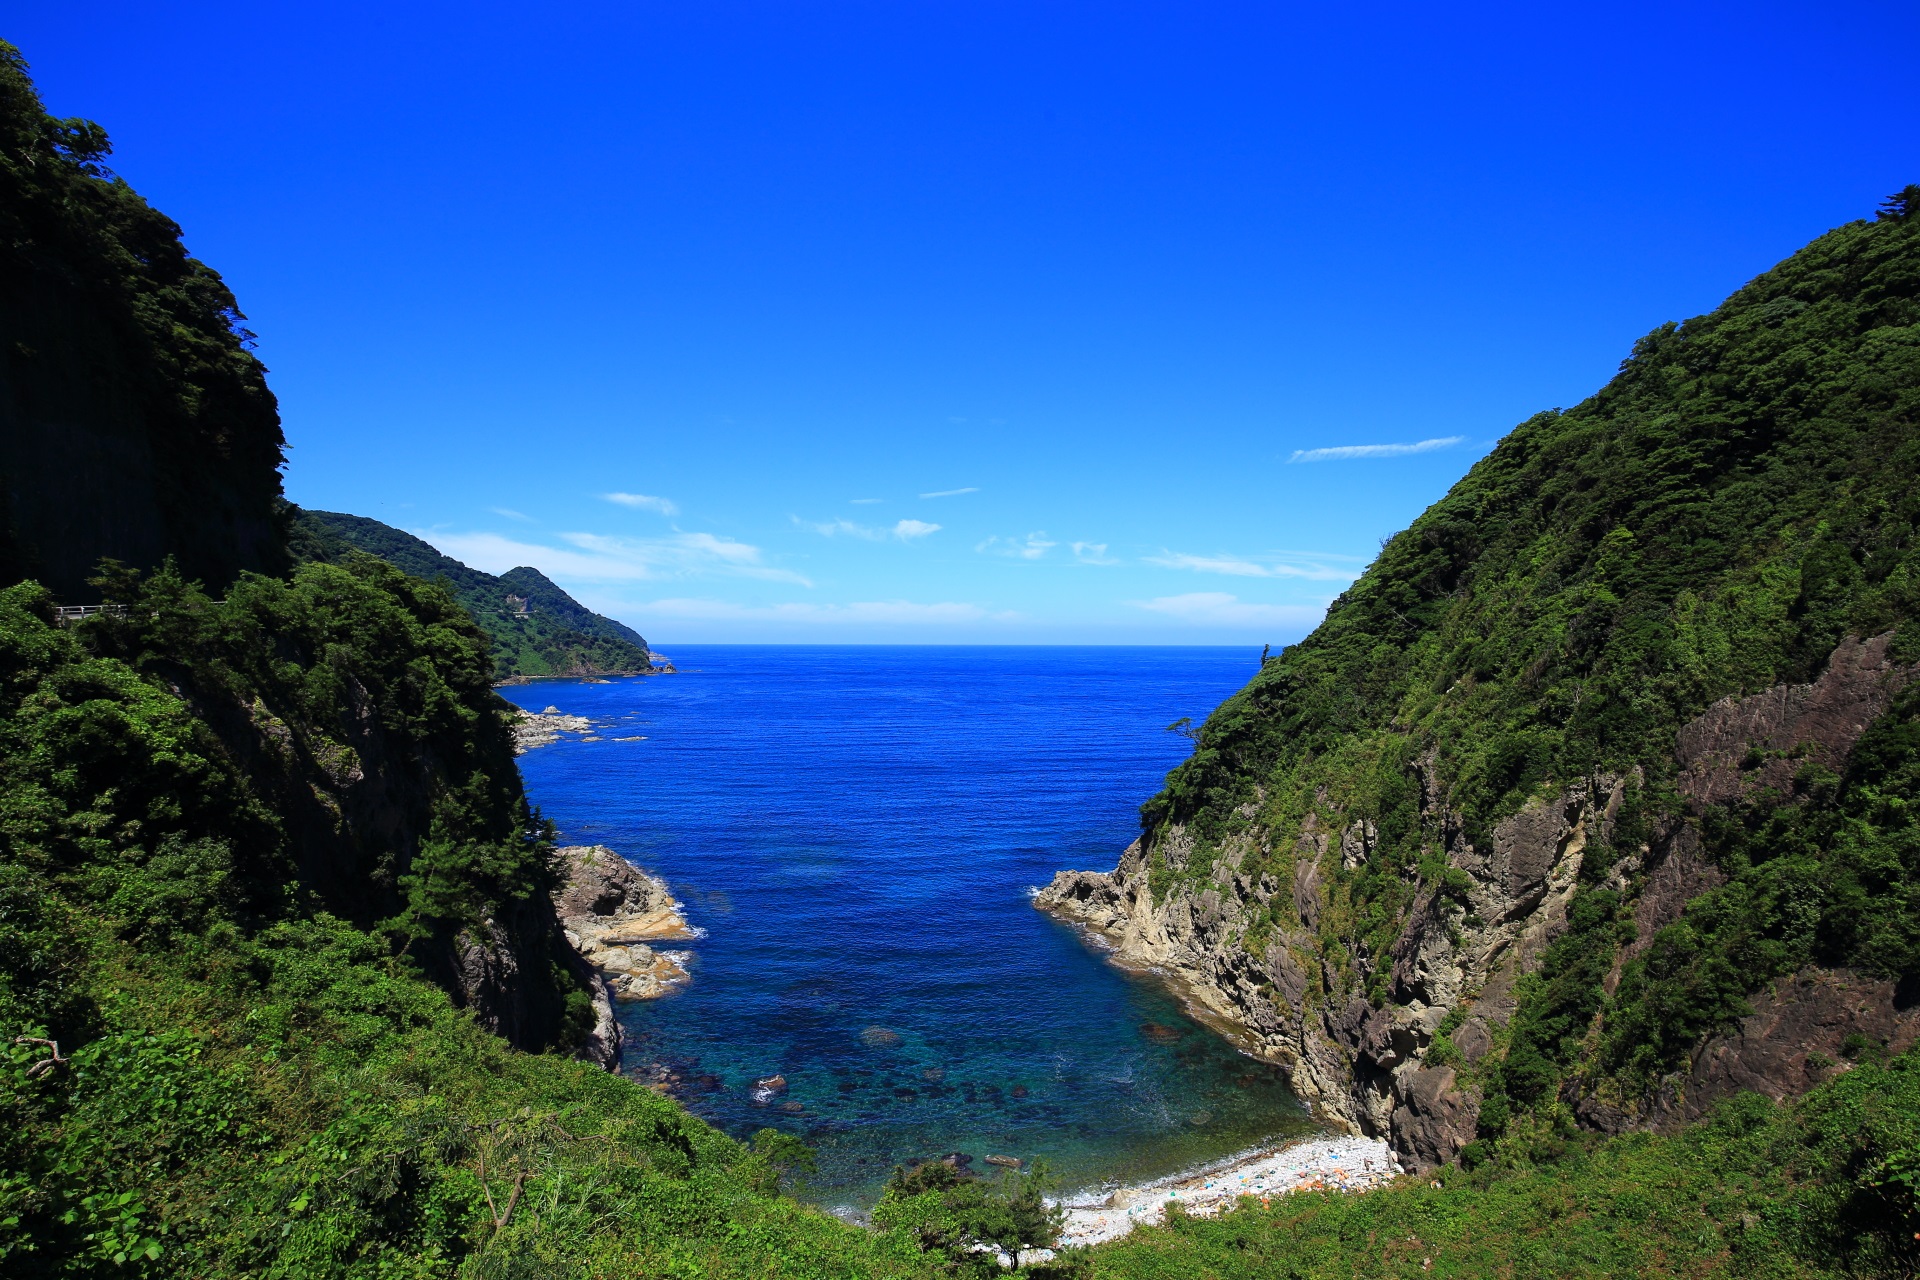 The Kamaya Coast and the Sea of Japan in Kyotango